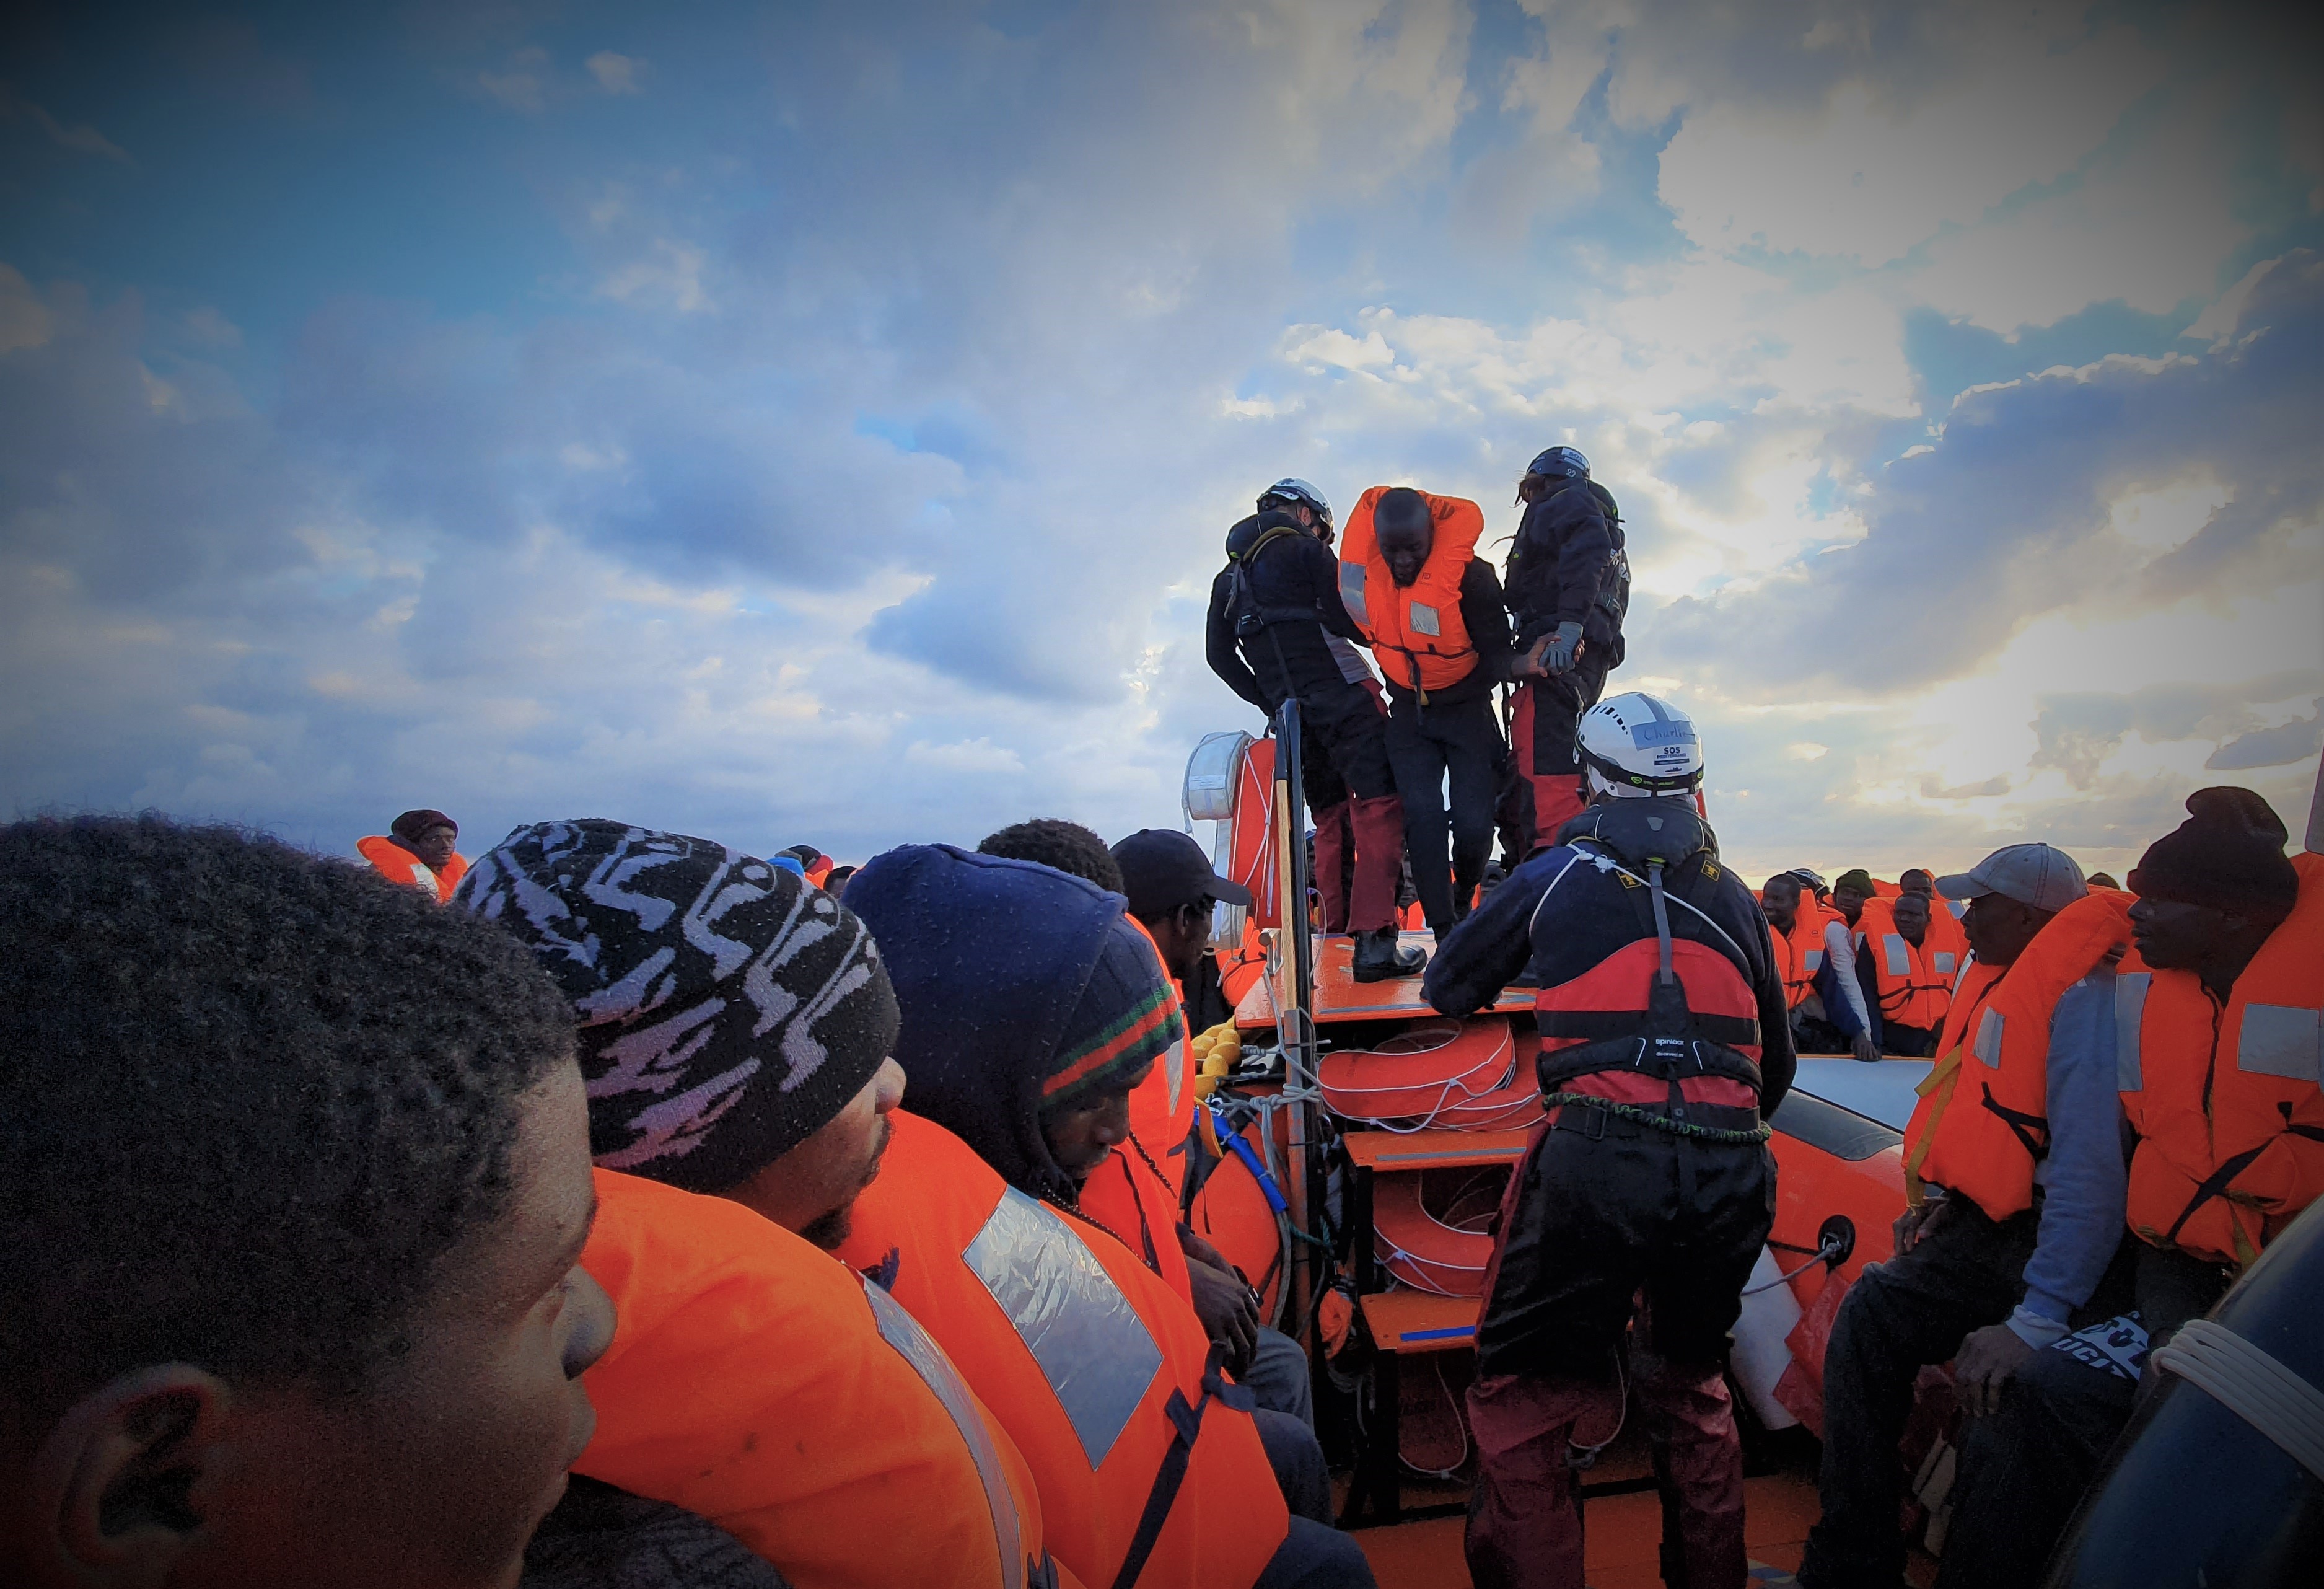 SOSteniamo i naufraghi del Mediterraneo-SOS Mediterranee Italia